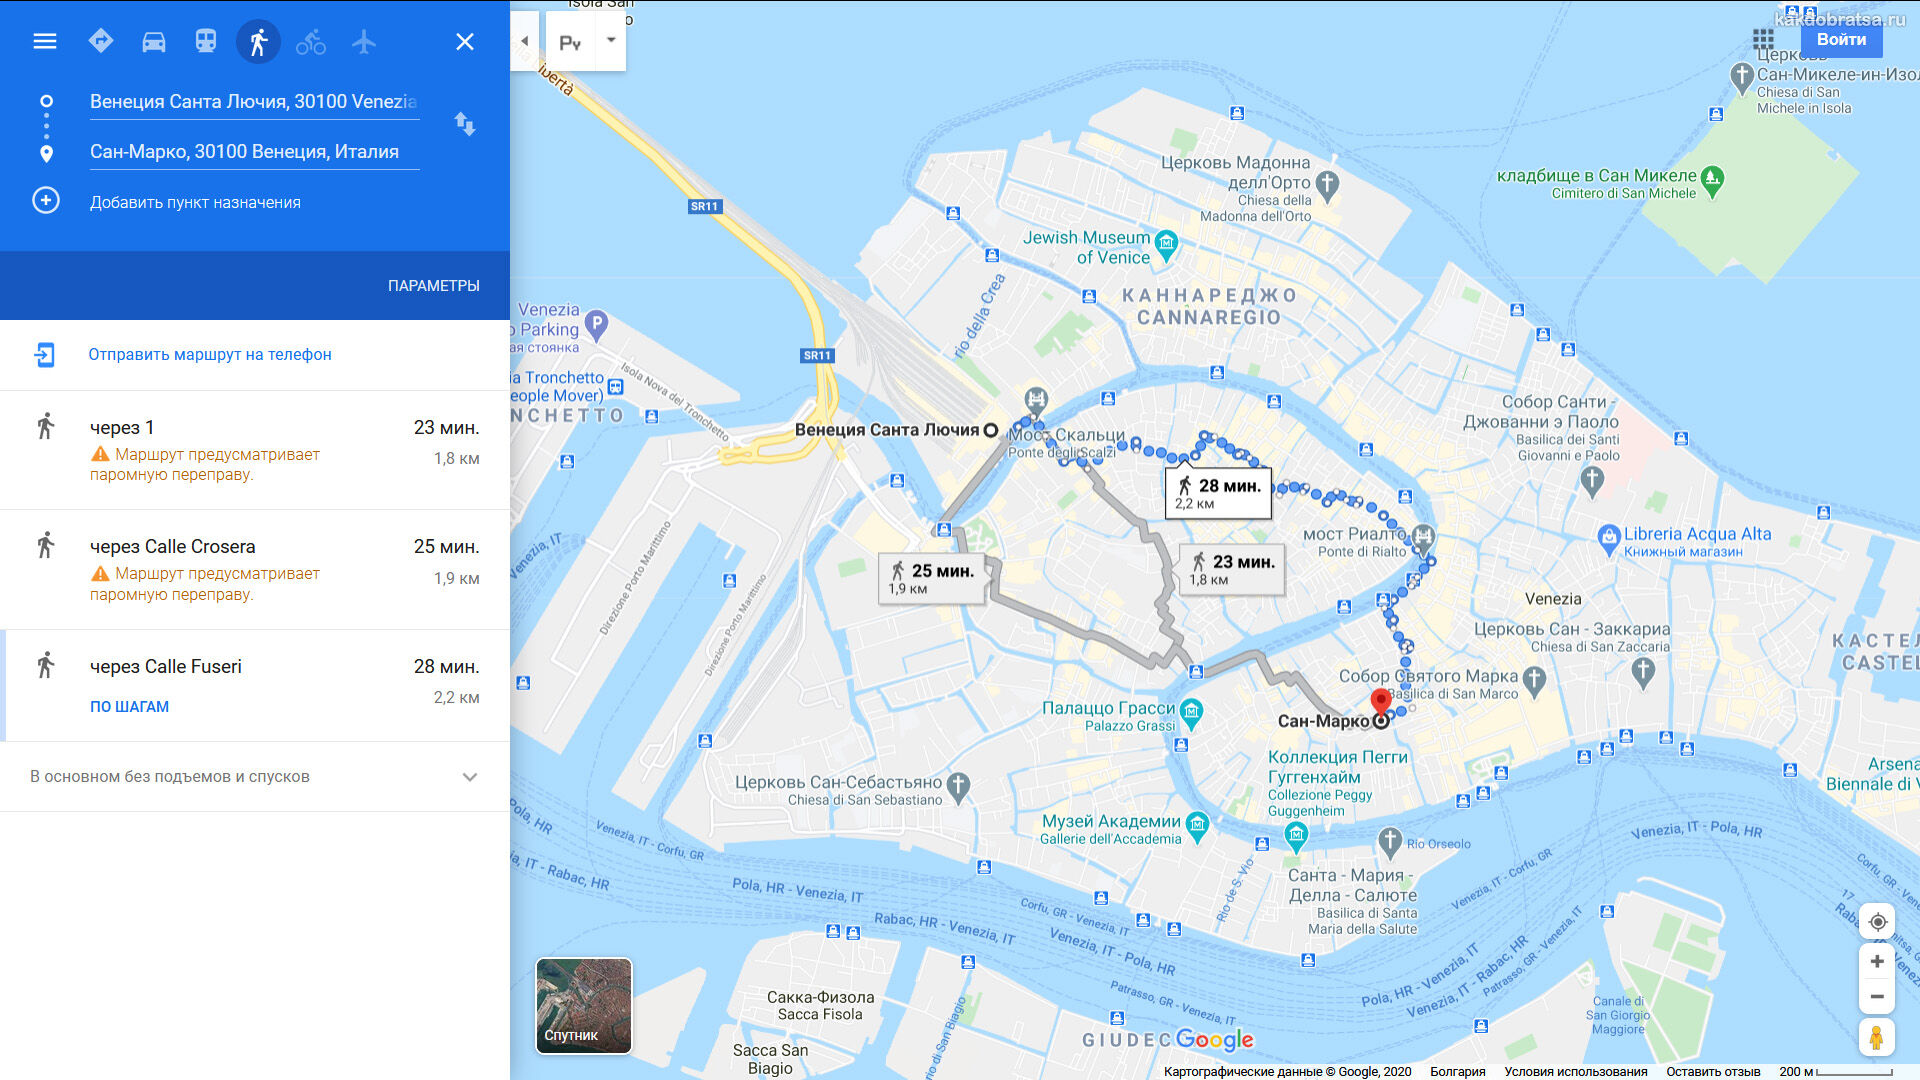 ЖД вокзал Венеции Санта Лючия на карте где находится и адрес